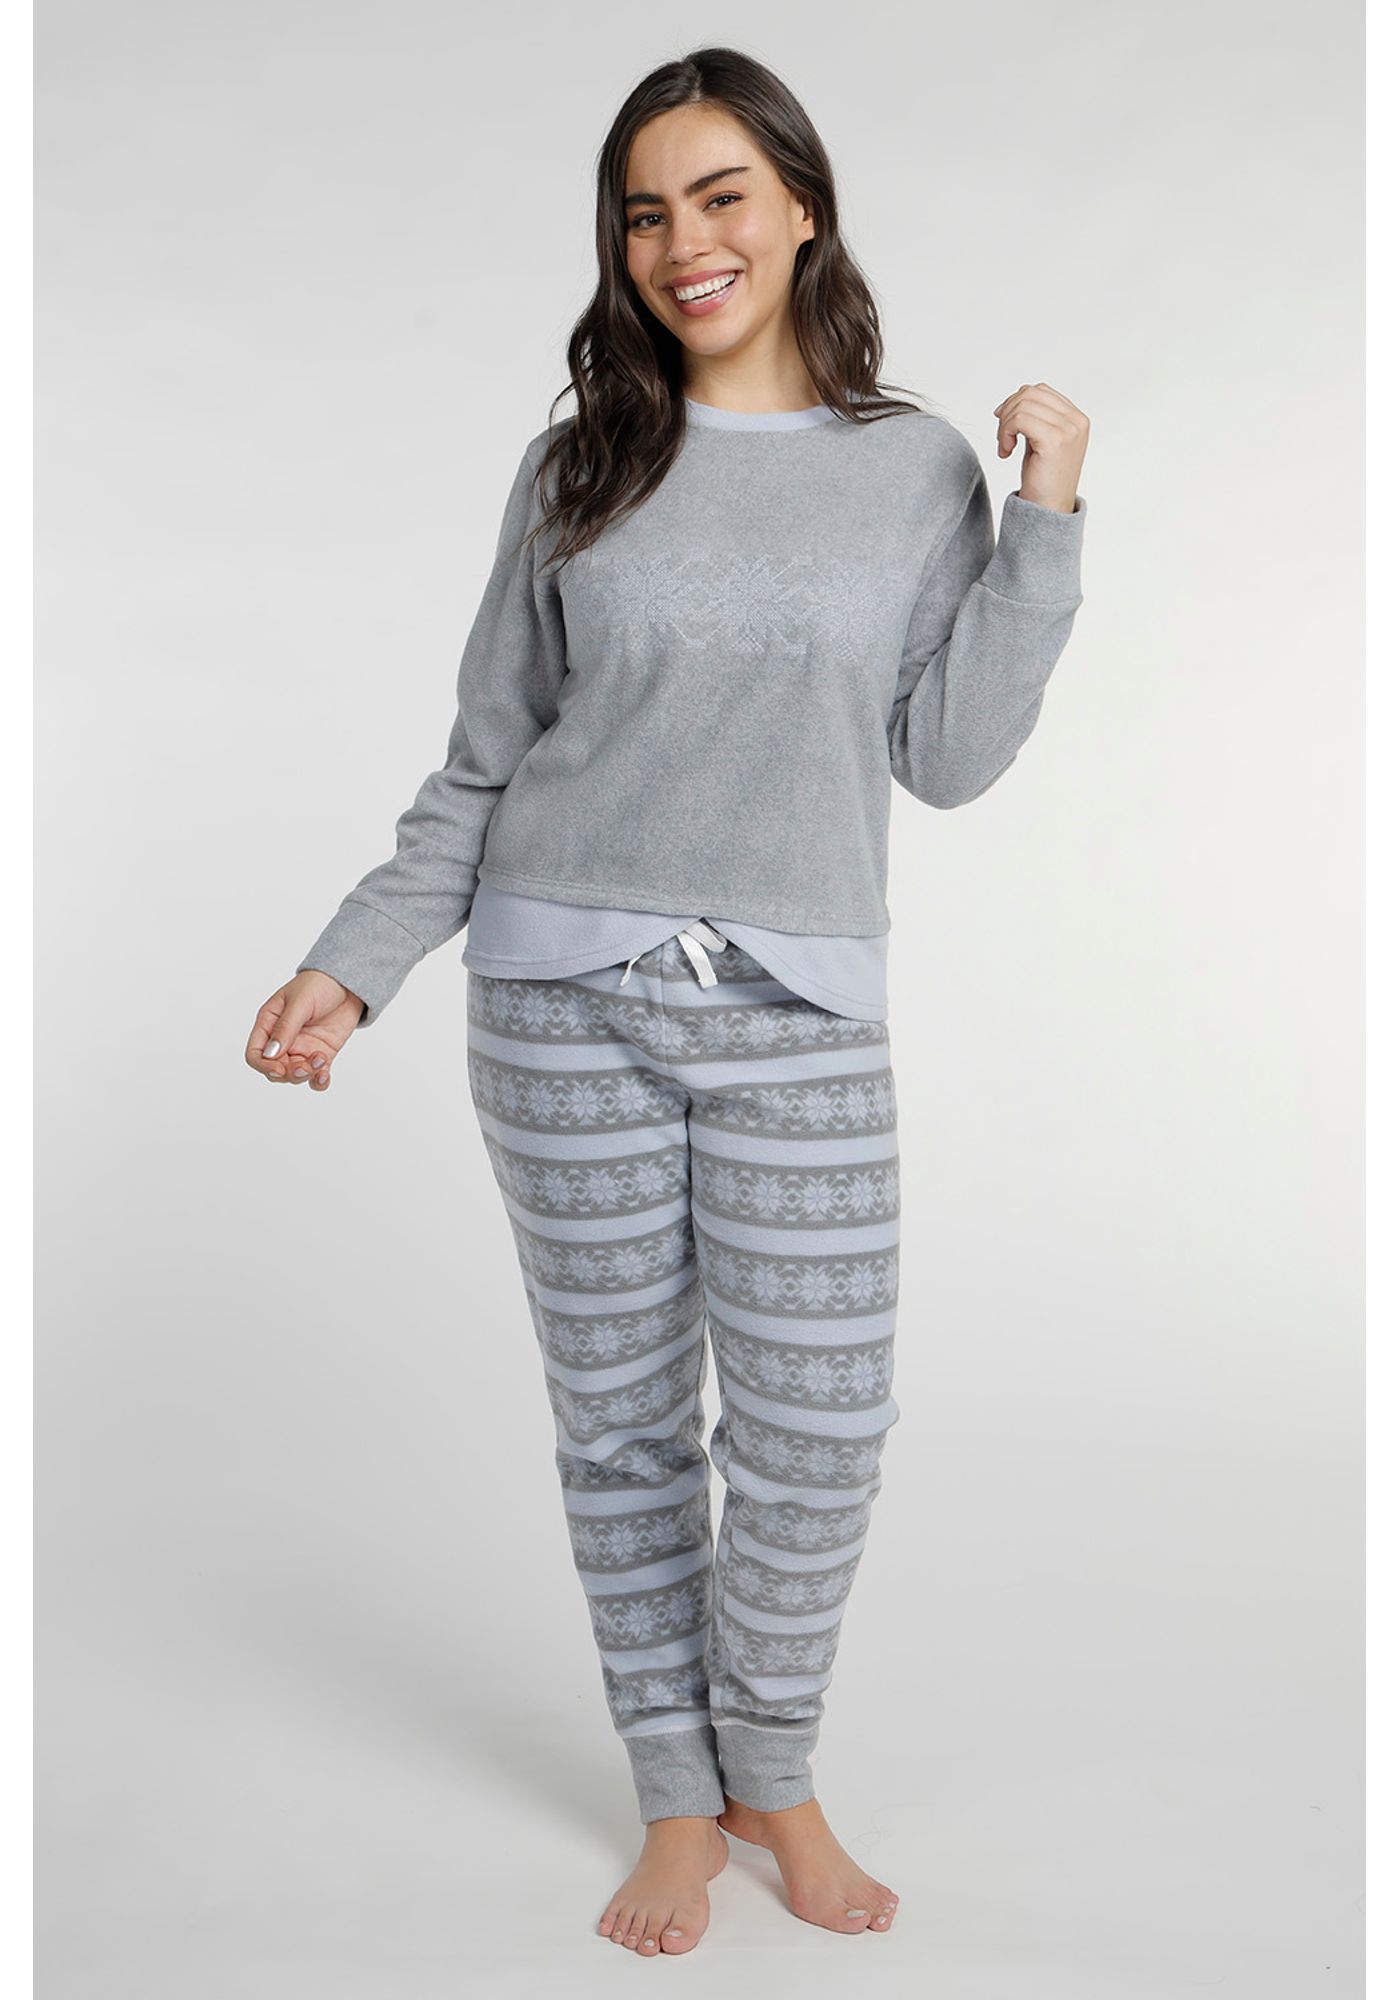 Pijamas Mujer Kayser Shop | Compra al Mejor